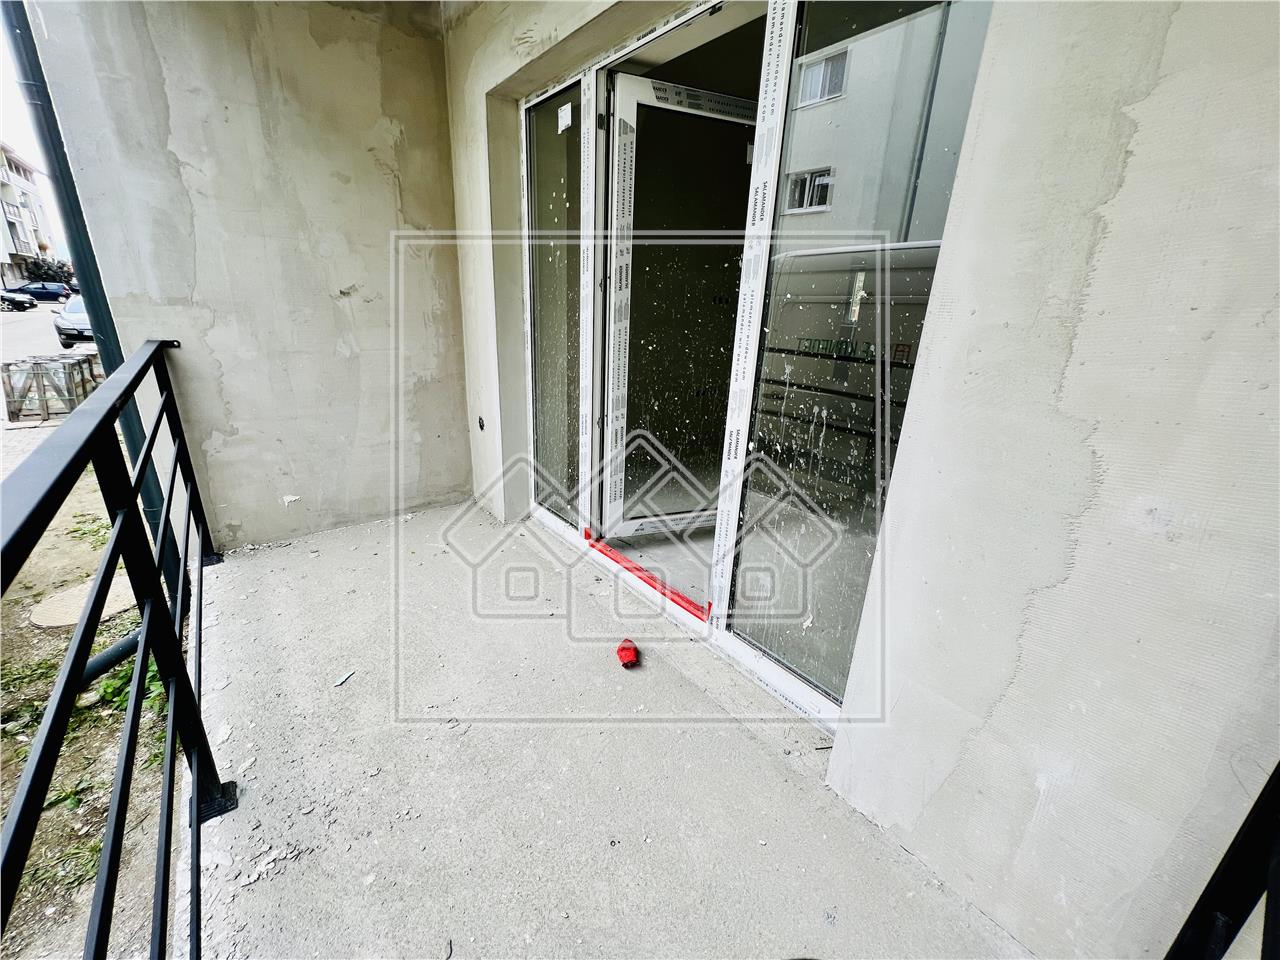 Apartament 3 camere de vanzare in Sibiu -Selimbar- parter inalt,balcon